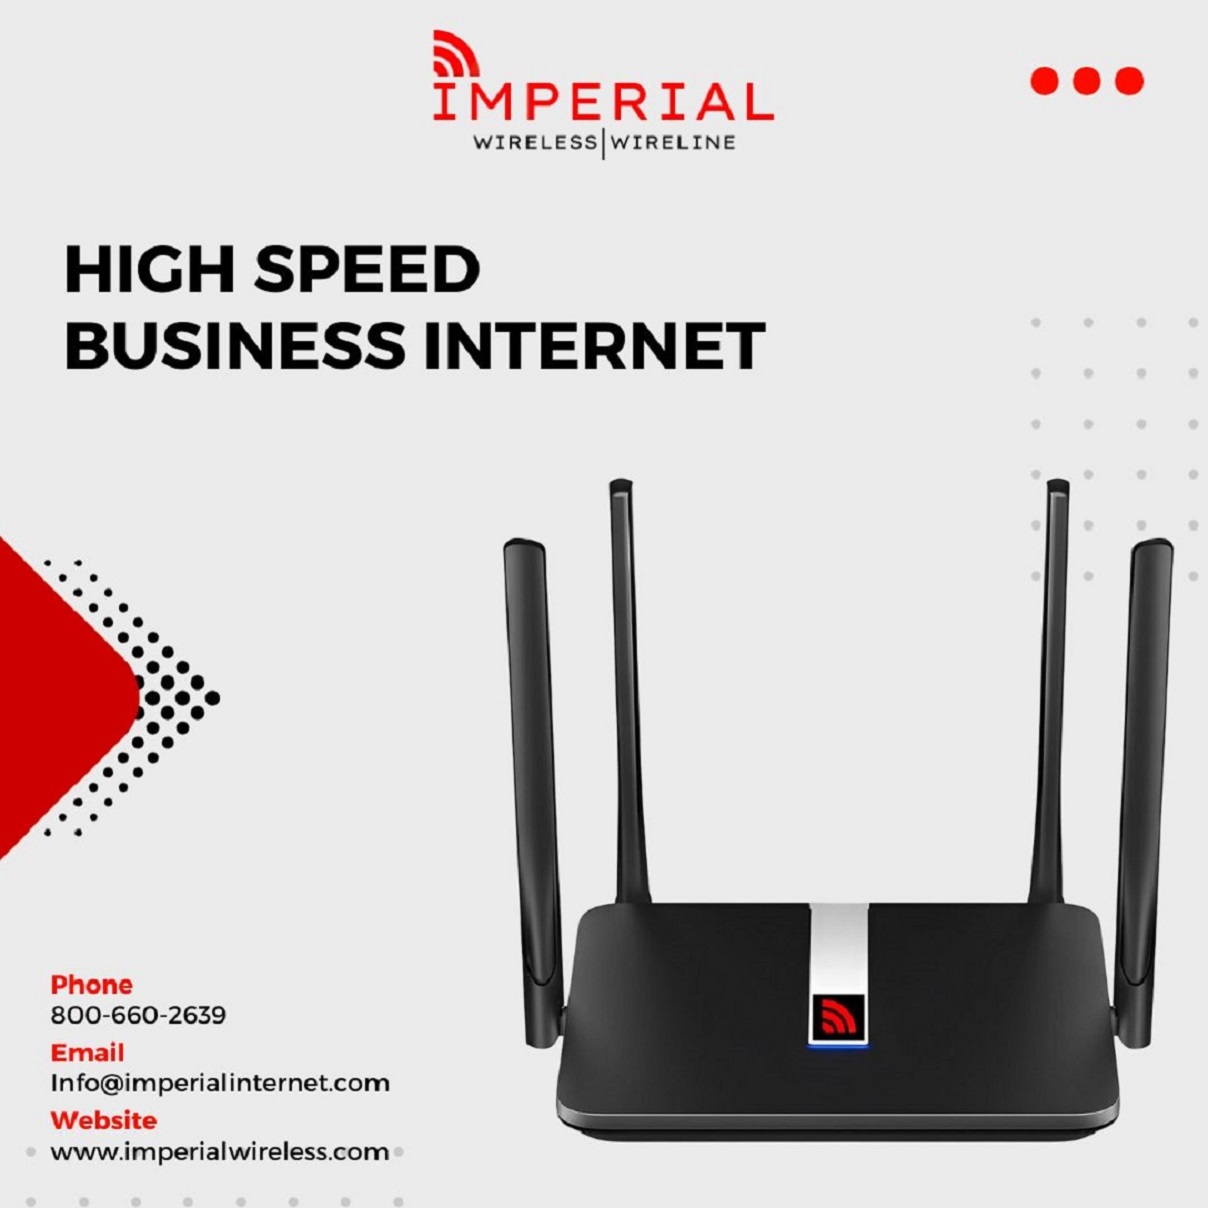 High-Speed Business Internet